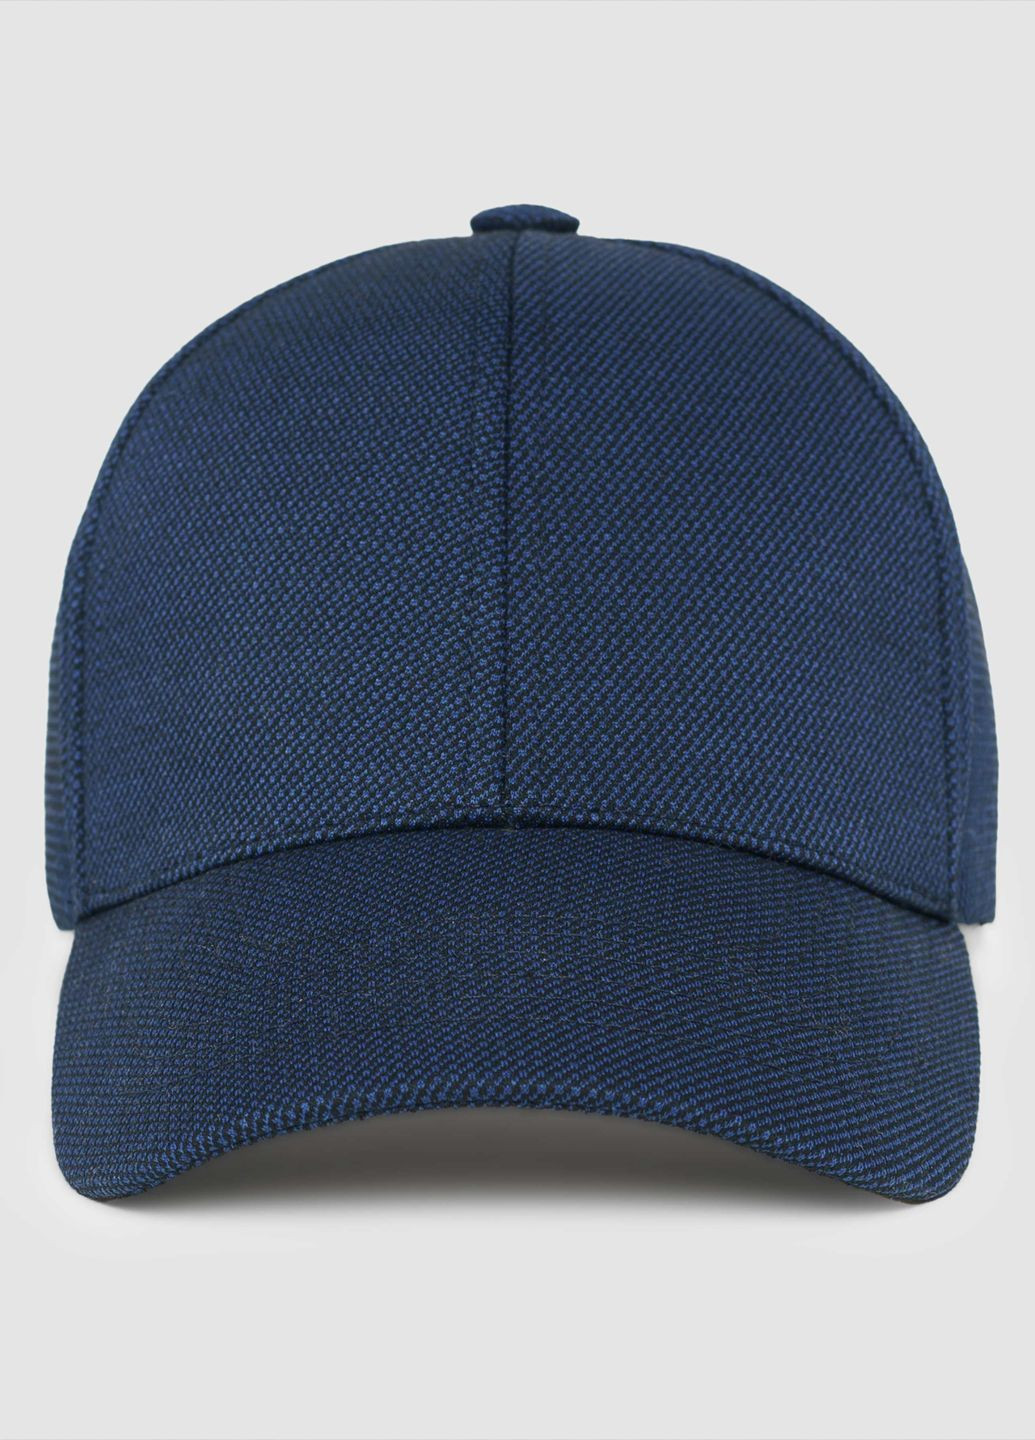 Кепка мужская синяя Arber кепка 2 (285766059)